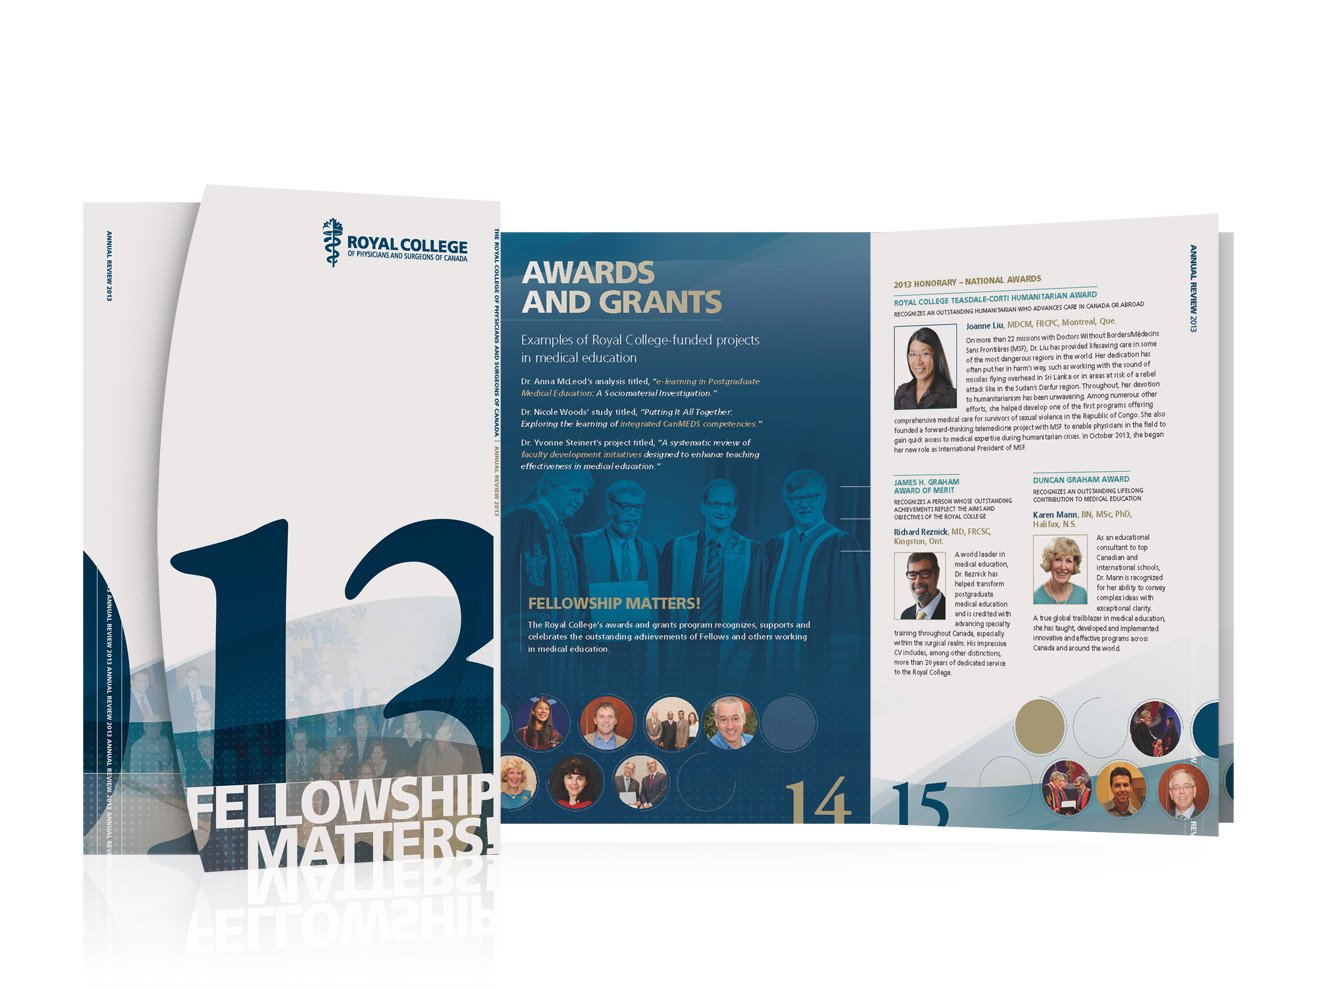 Royal College 2013 Fellowship Matters brochure